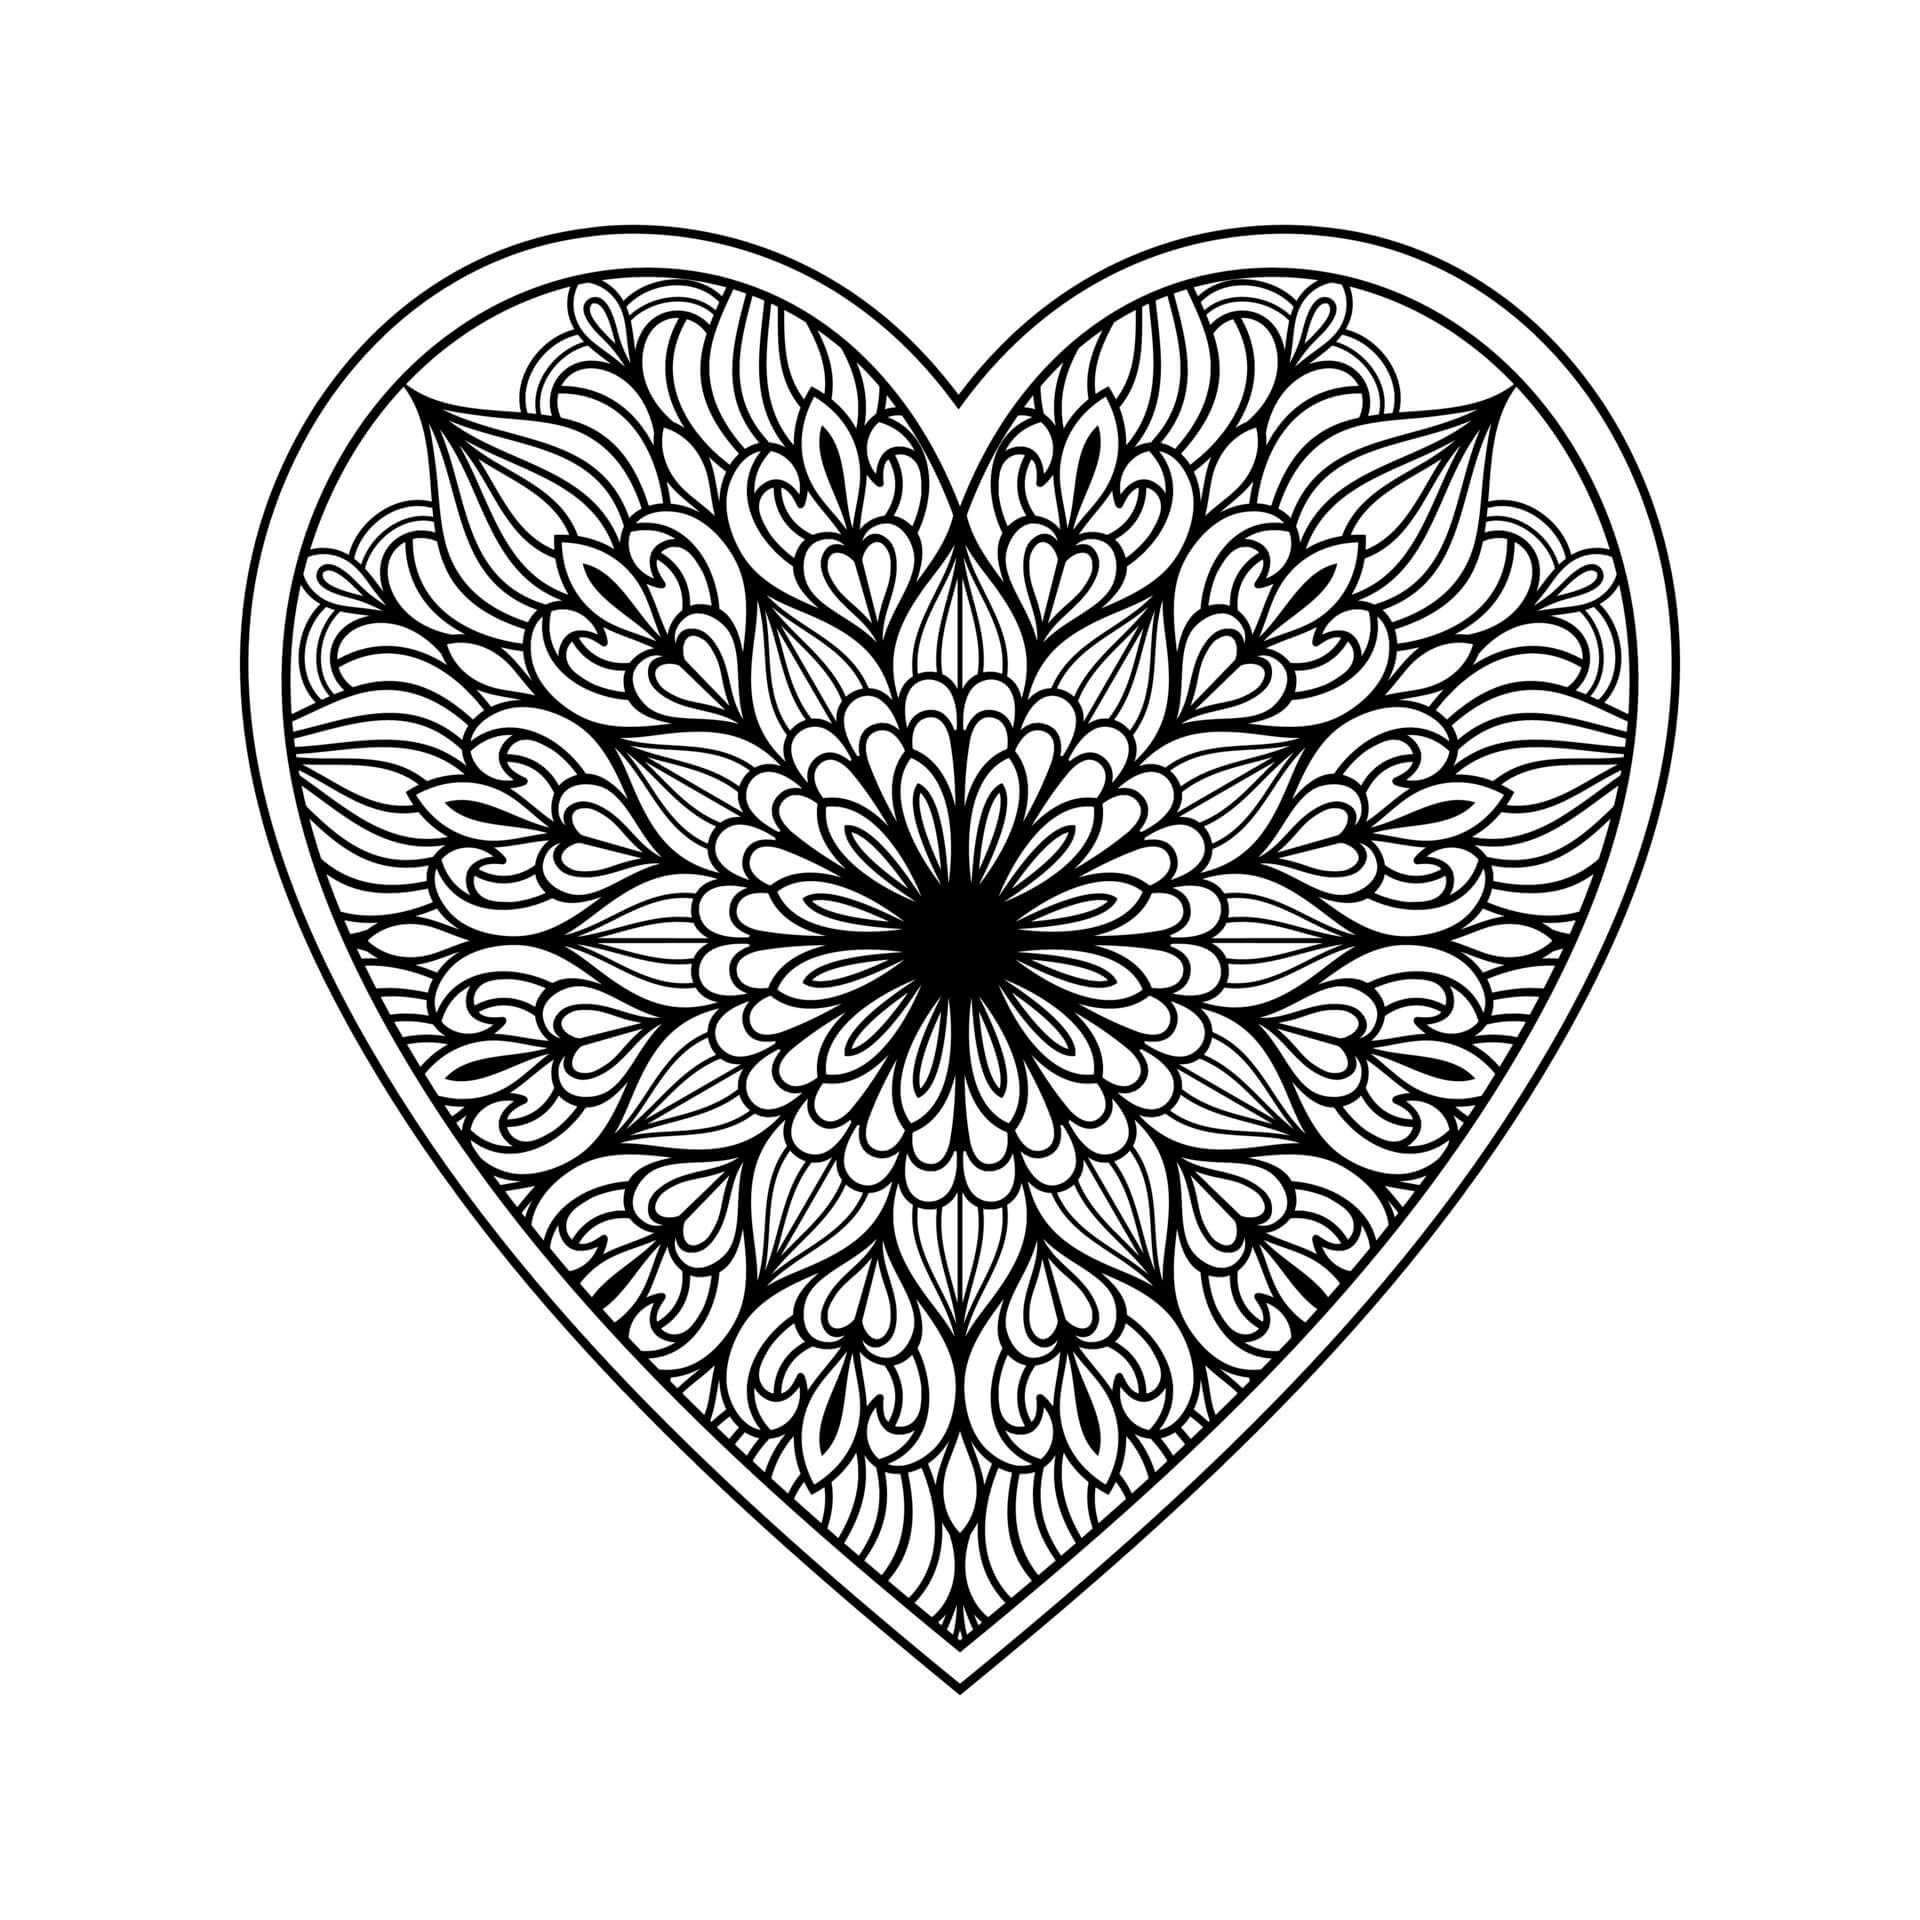 Mandala Heart Coloring Page - Sheet 14 Mandalas